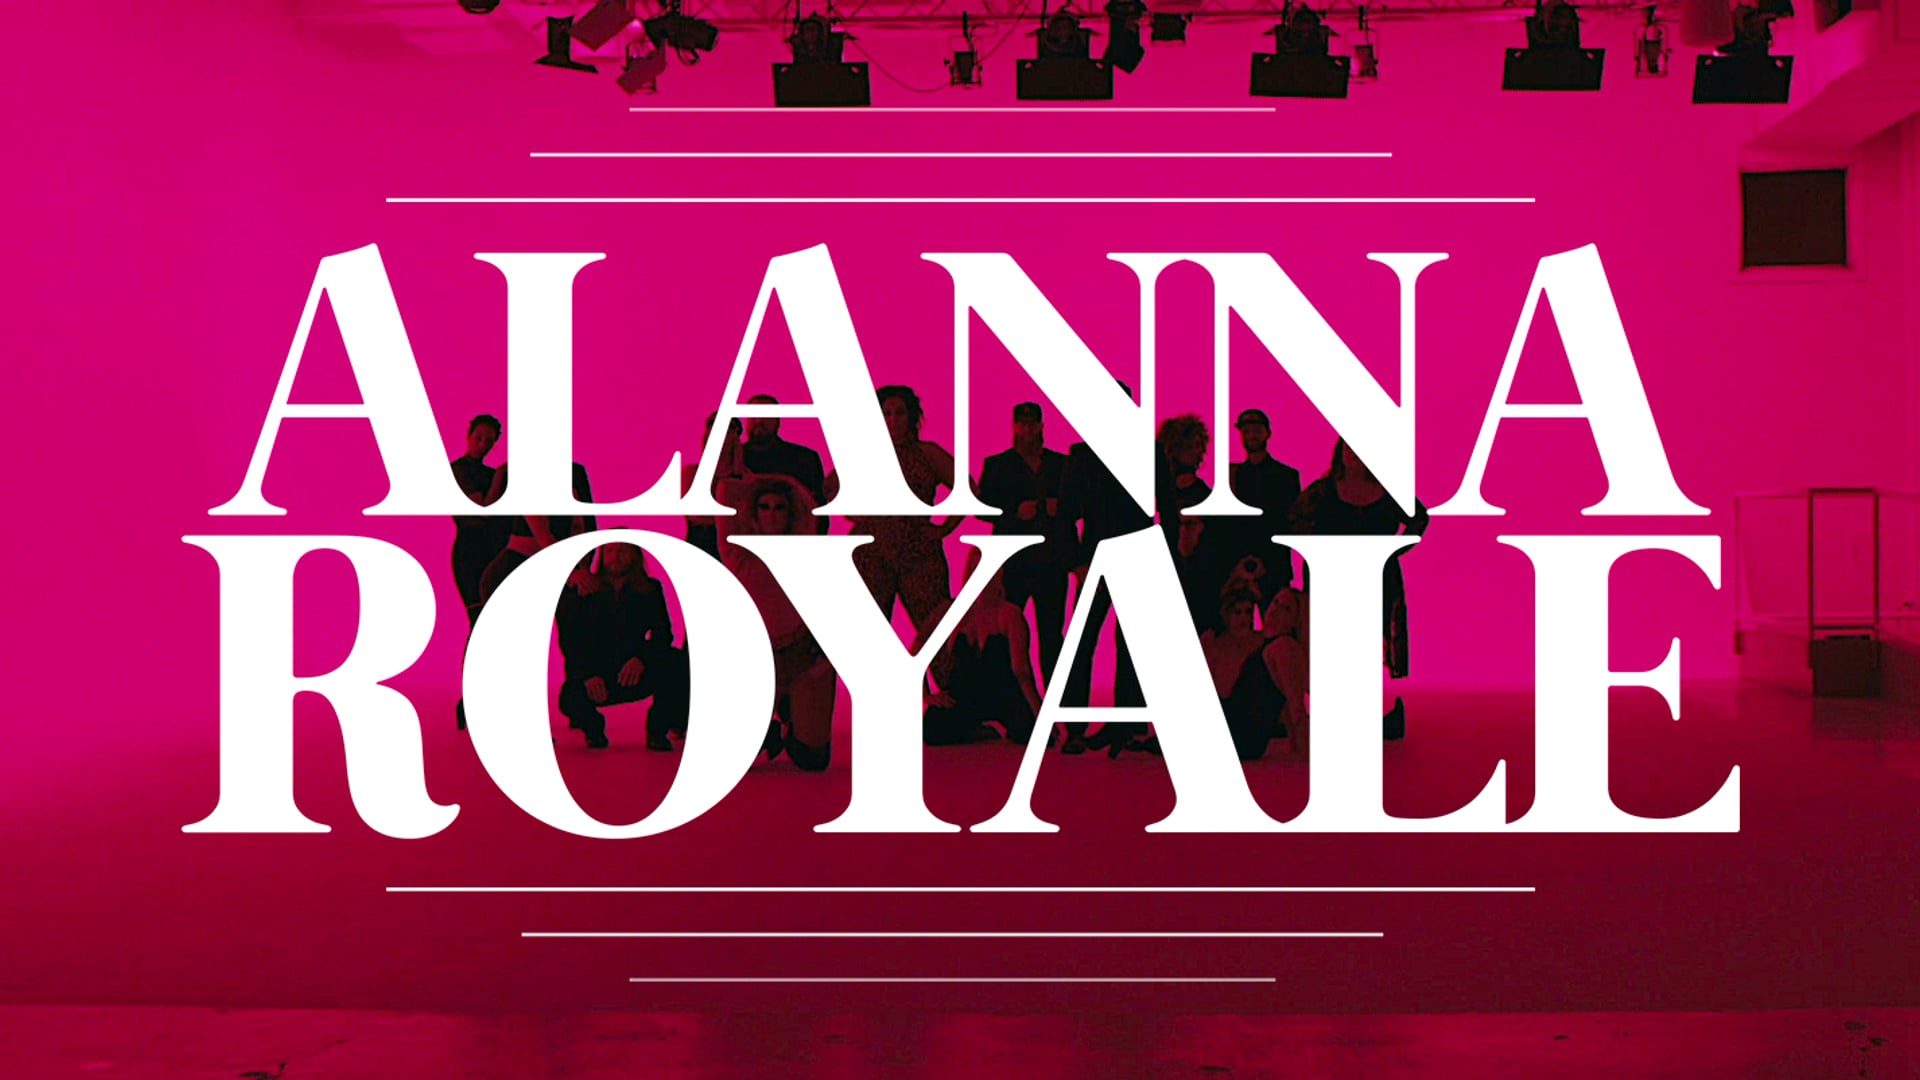 Alanna Royale - I Know (Music Video)